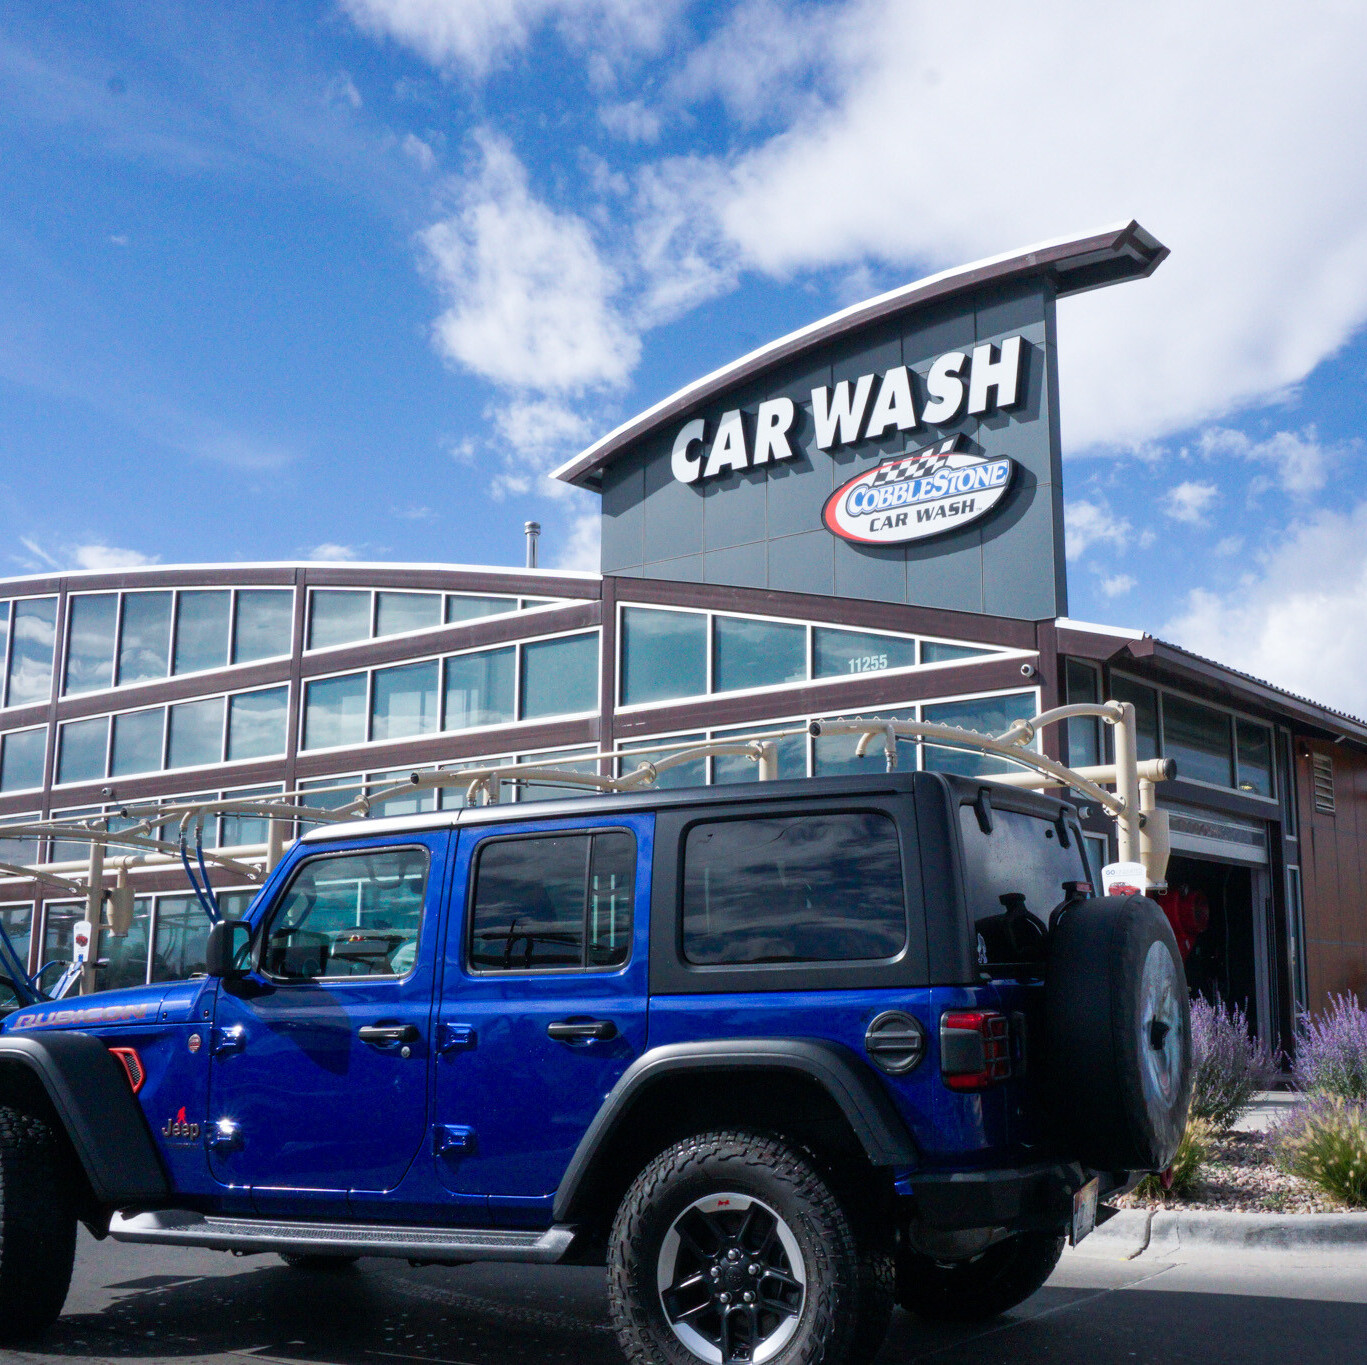 Cobblestone  Phoenix and Denver Car Wash & Car Detailing